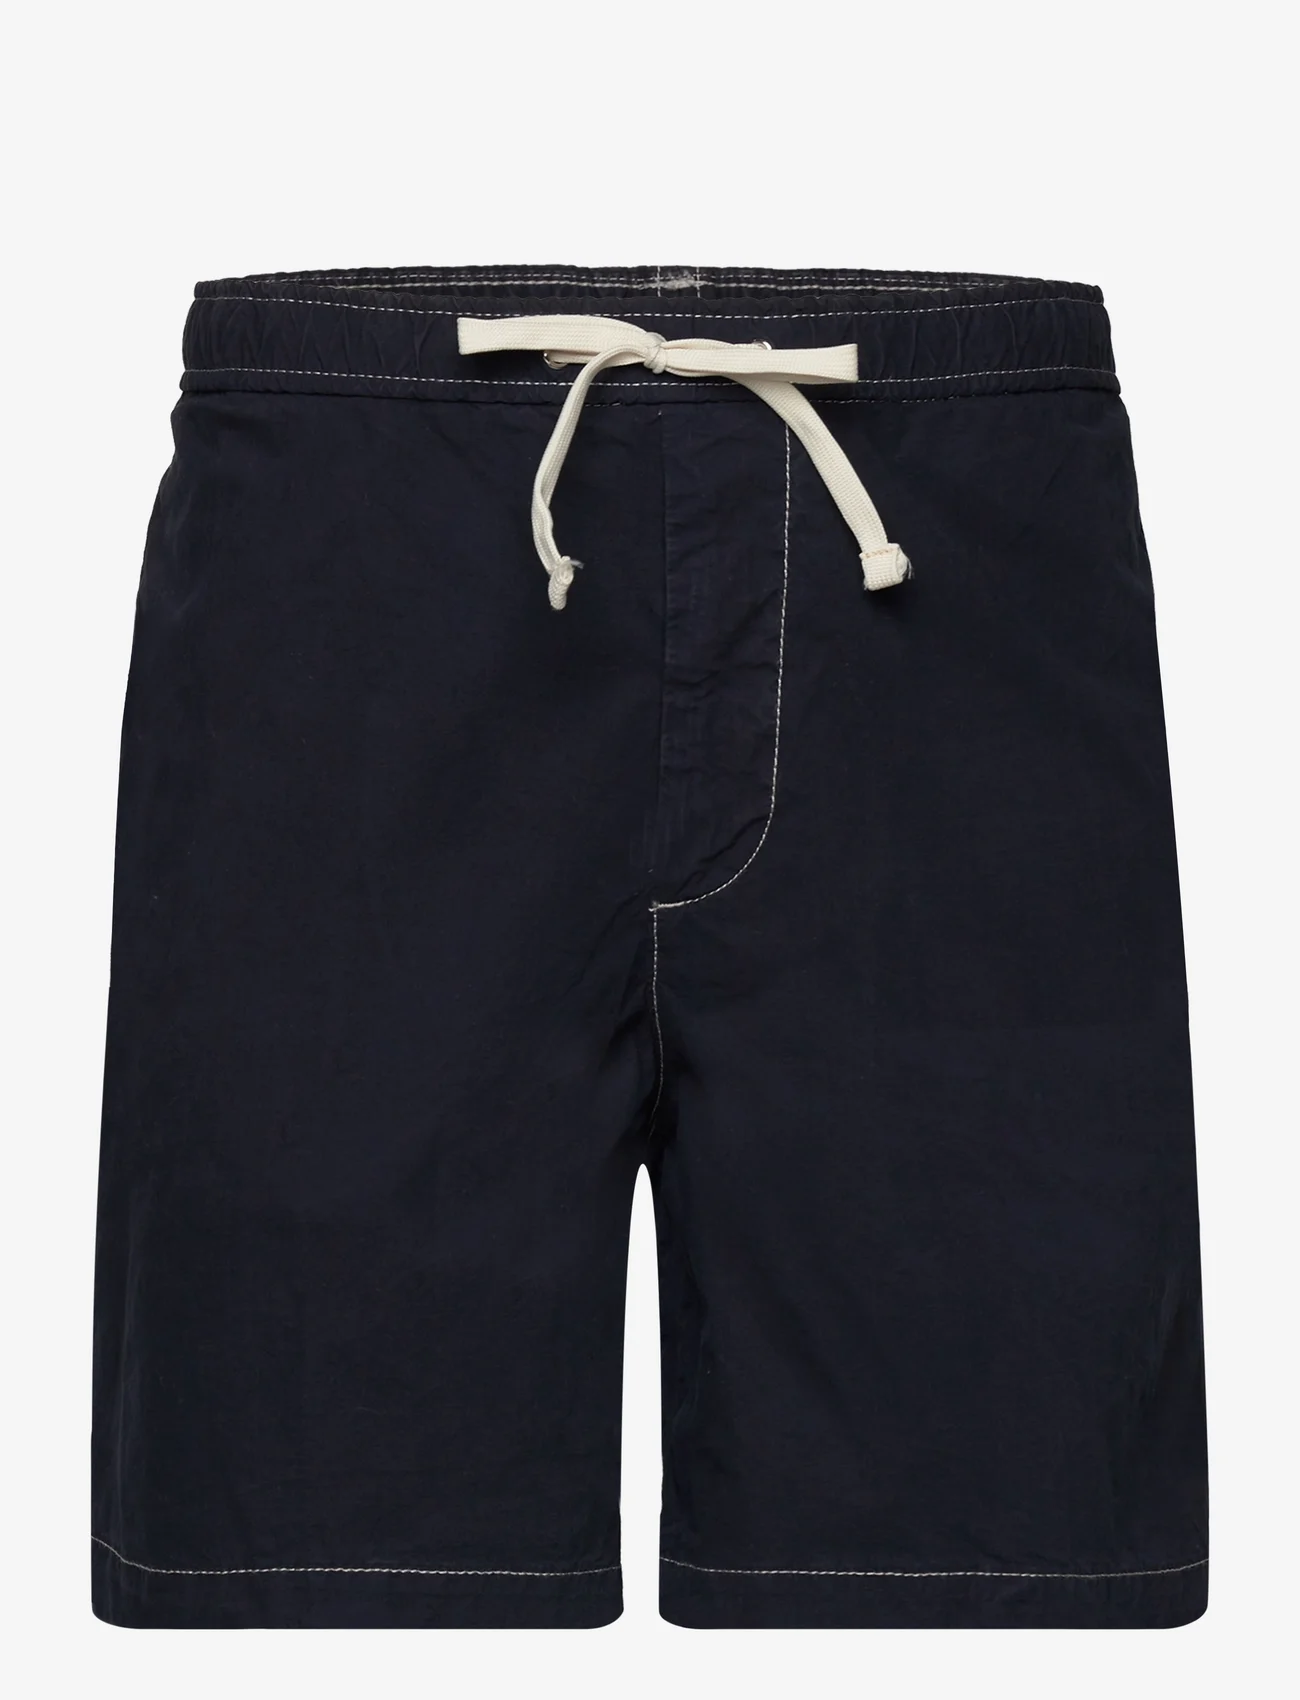 BOSS - Karlos-DS-Shorts - chino shorts - dark blue - 0